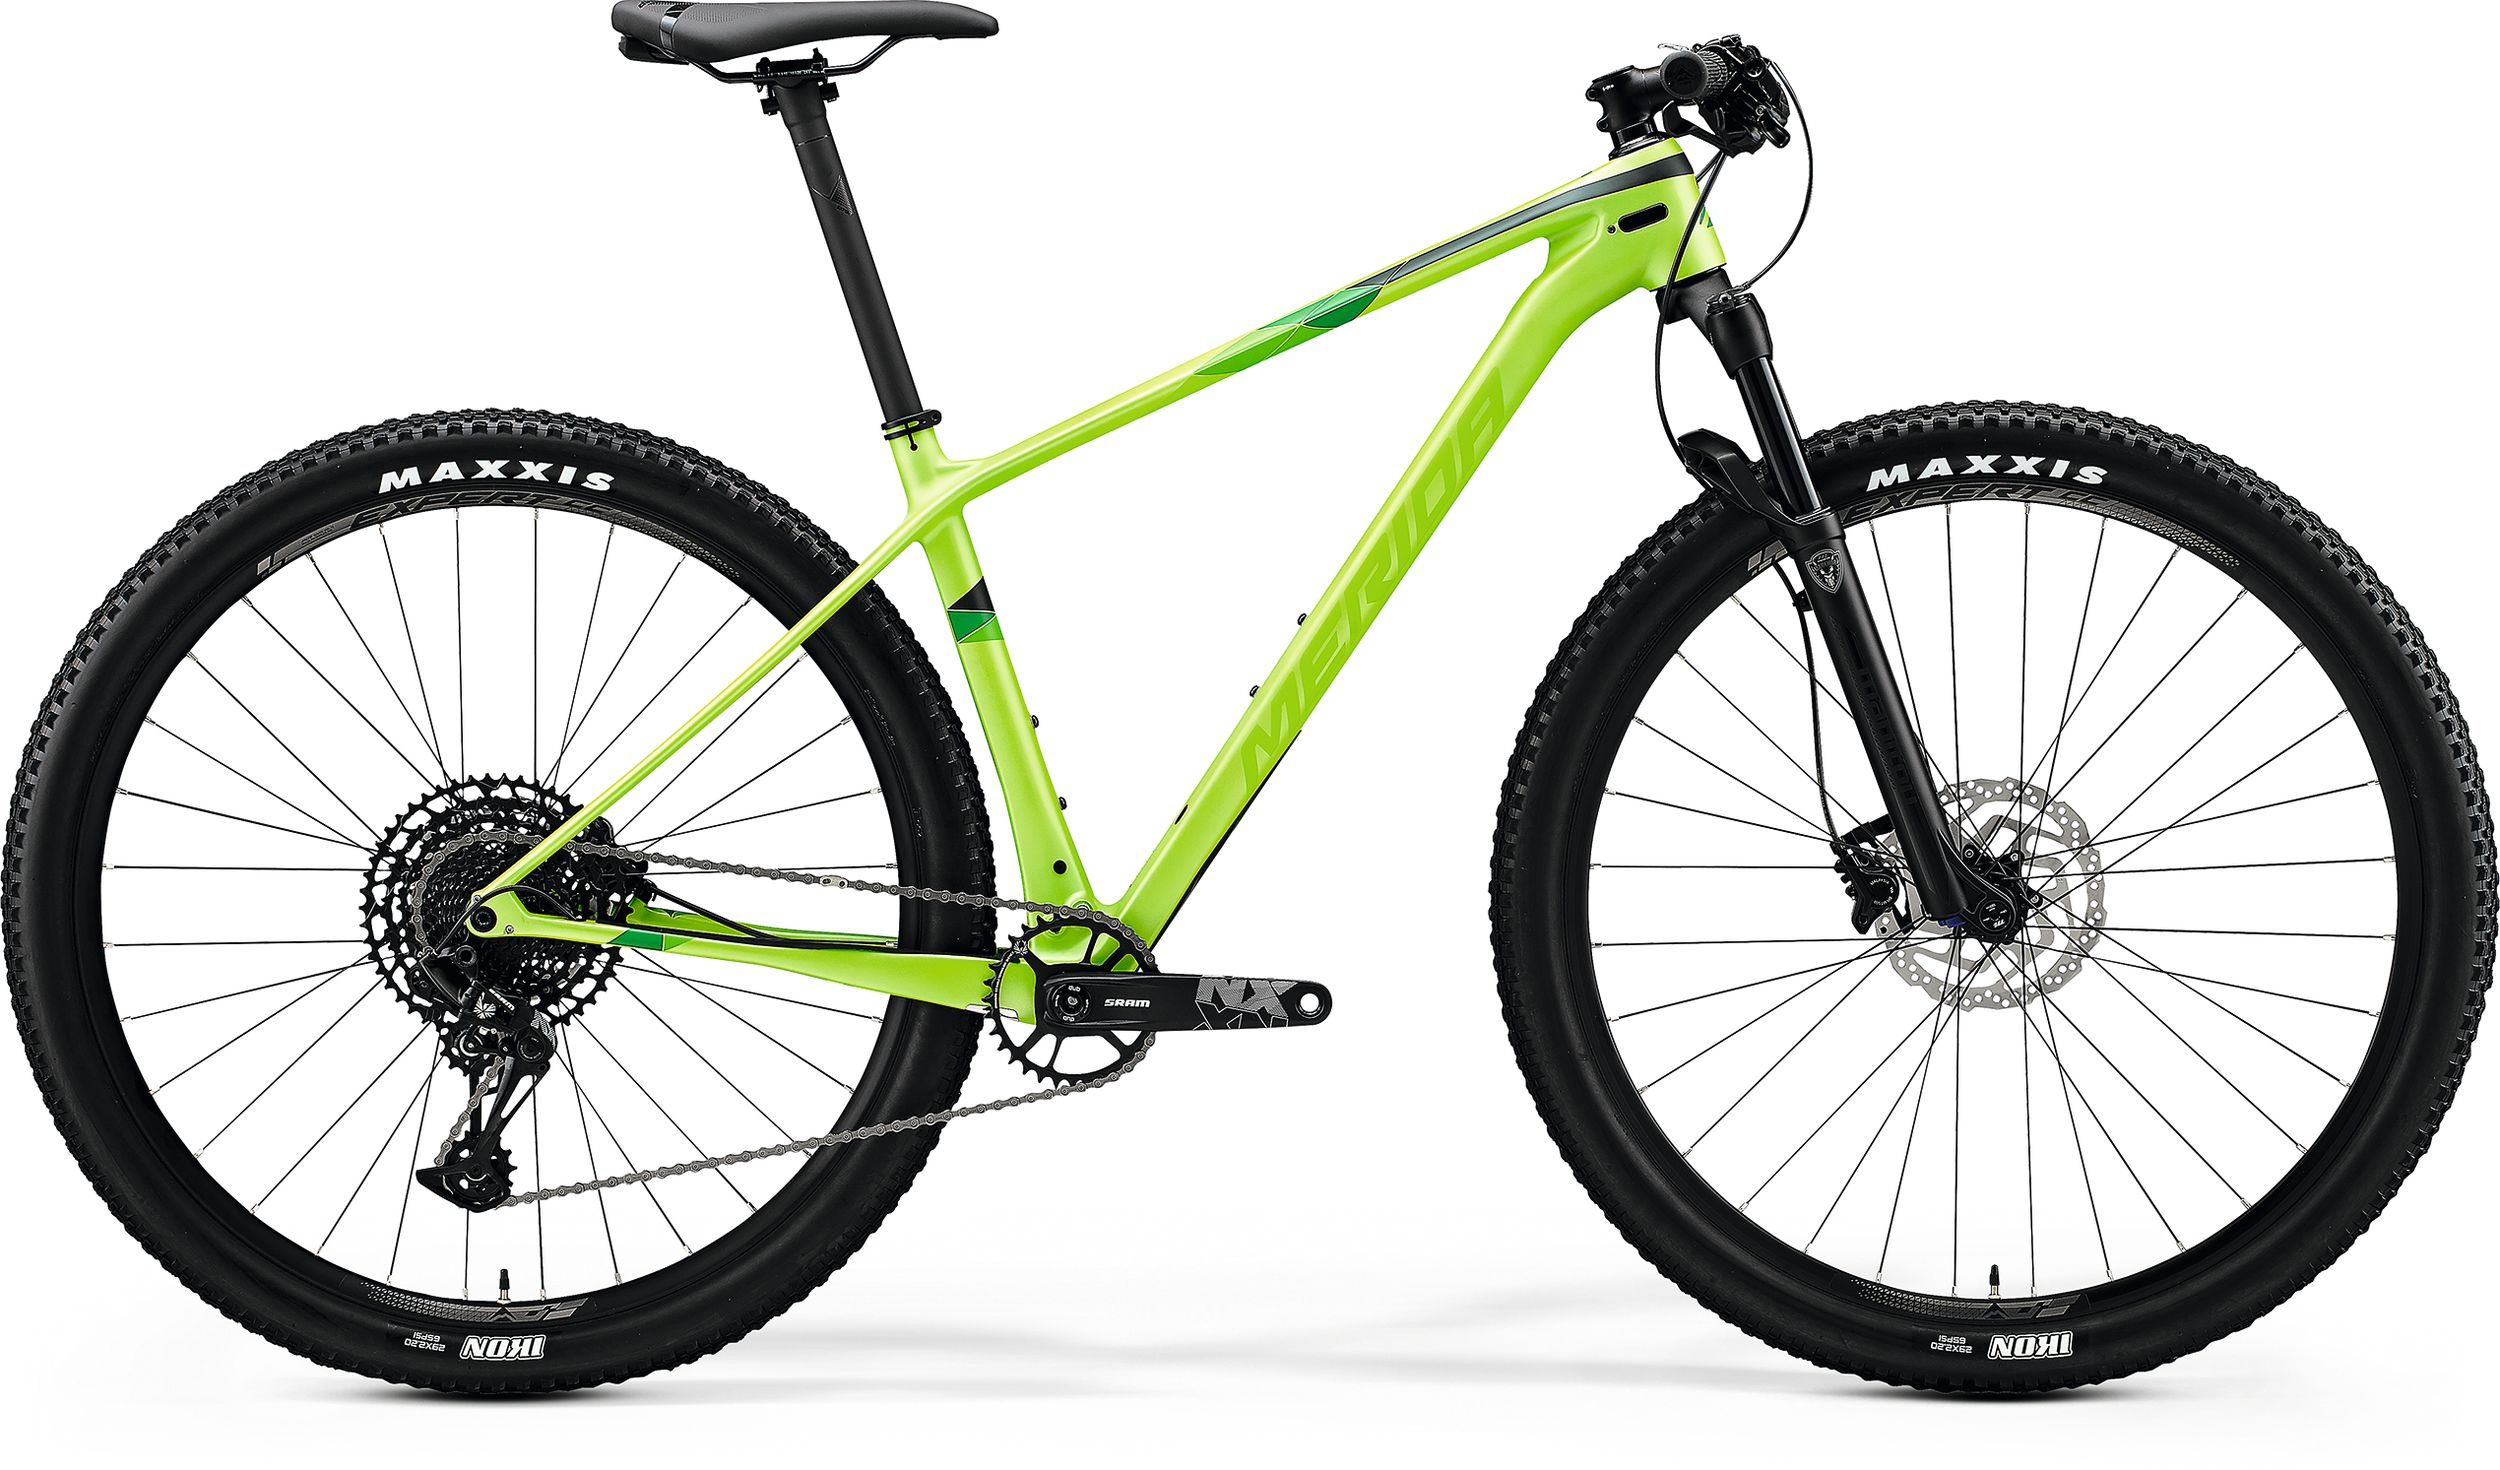 genesis mountain bike v2100